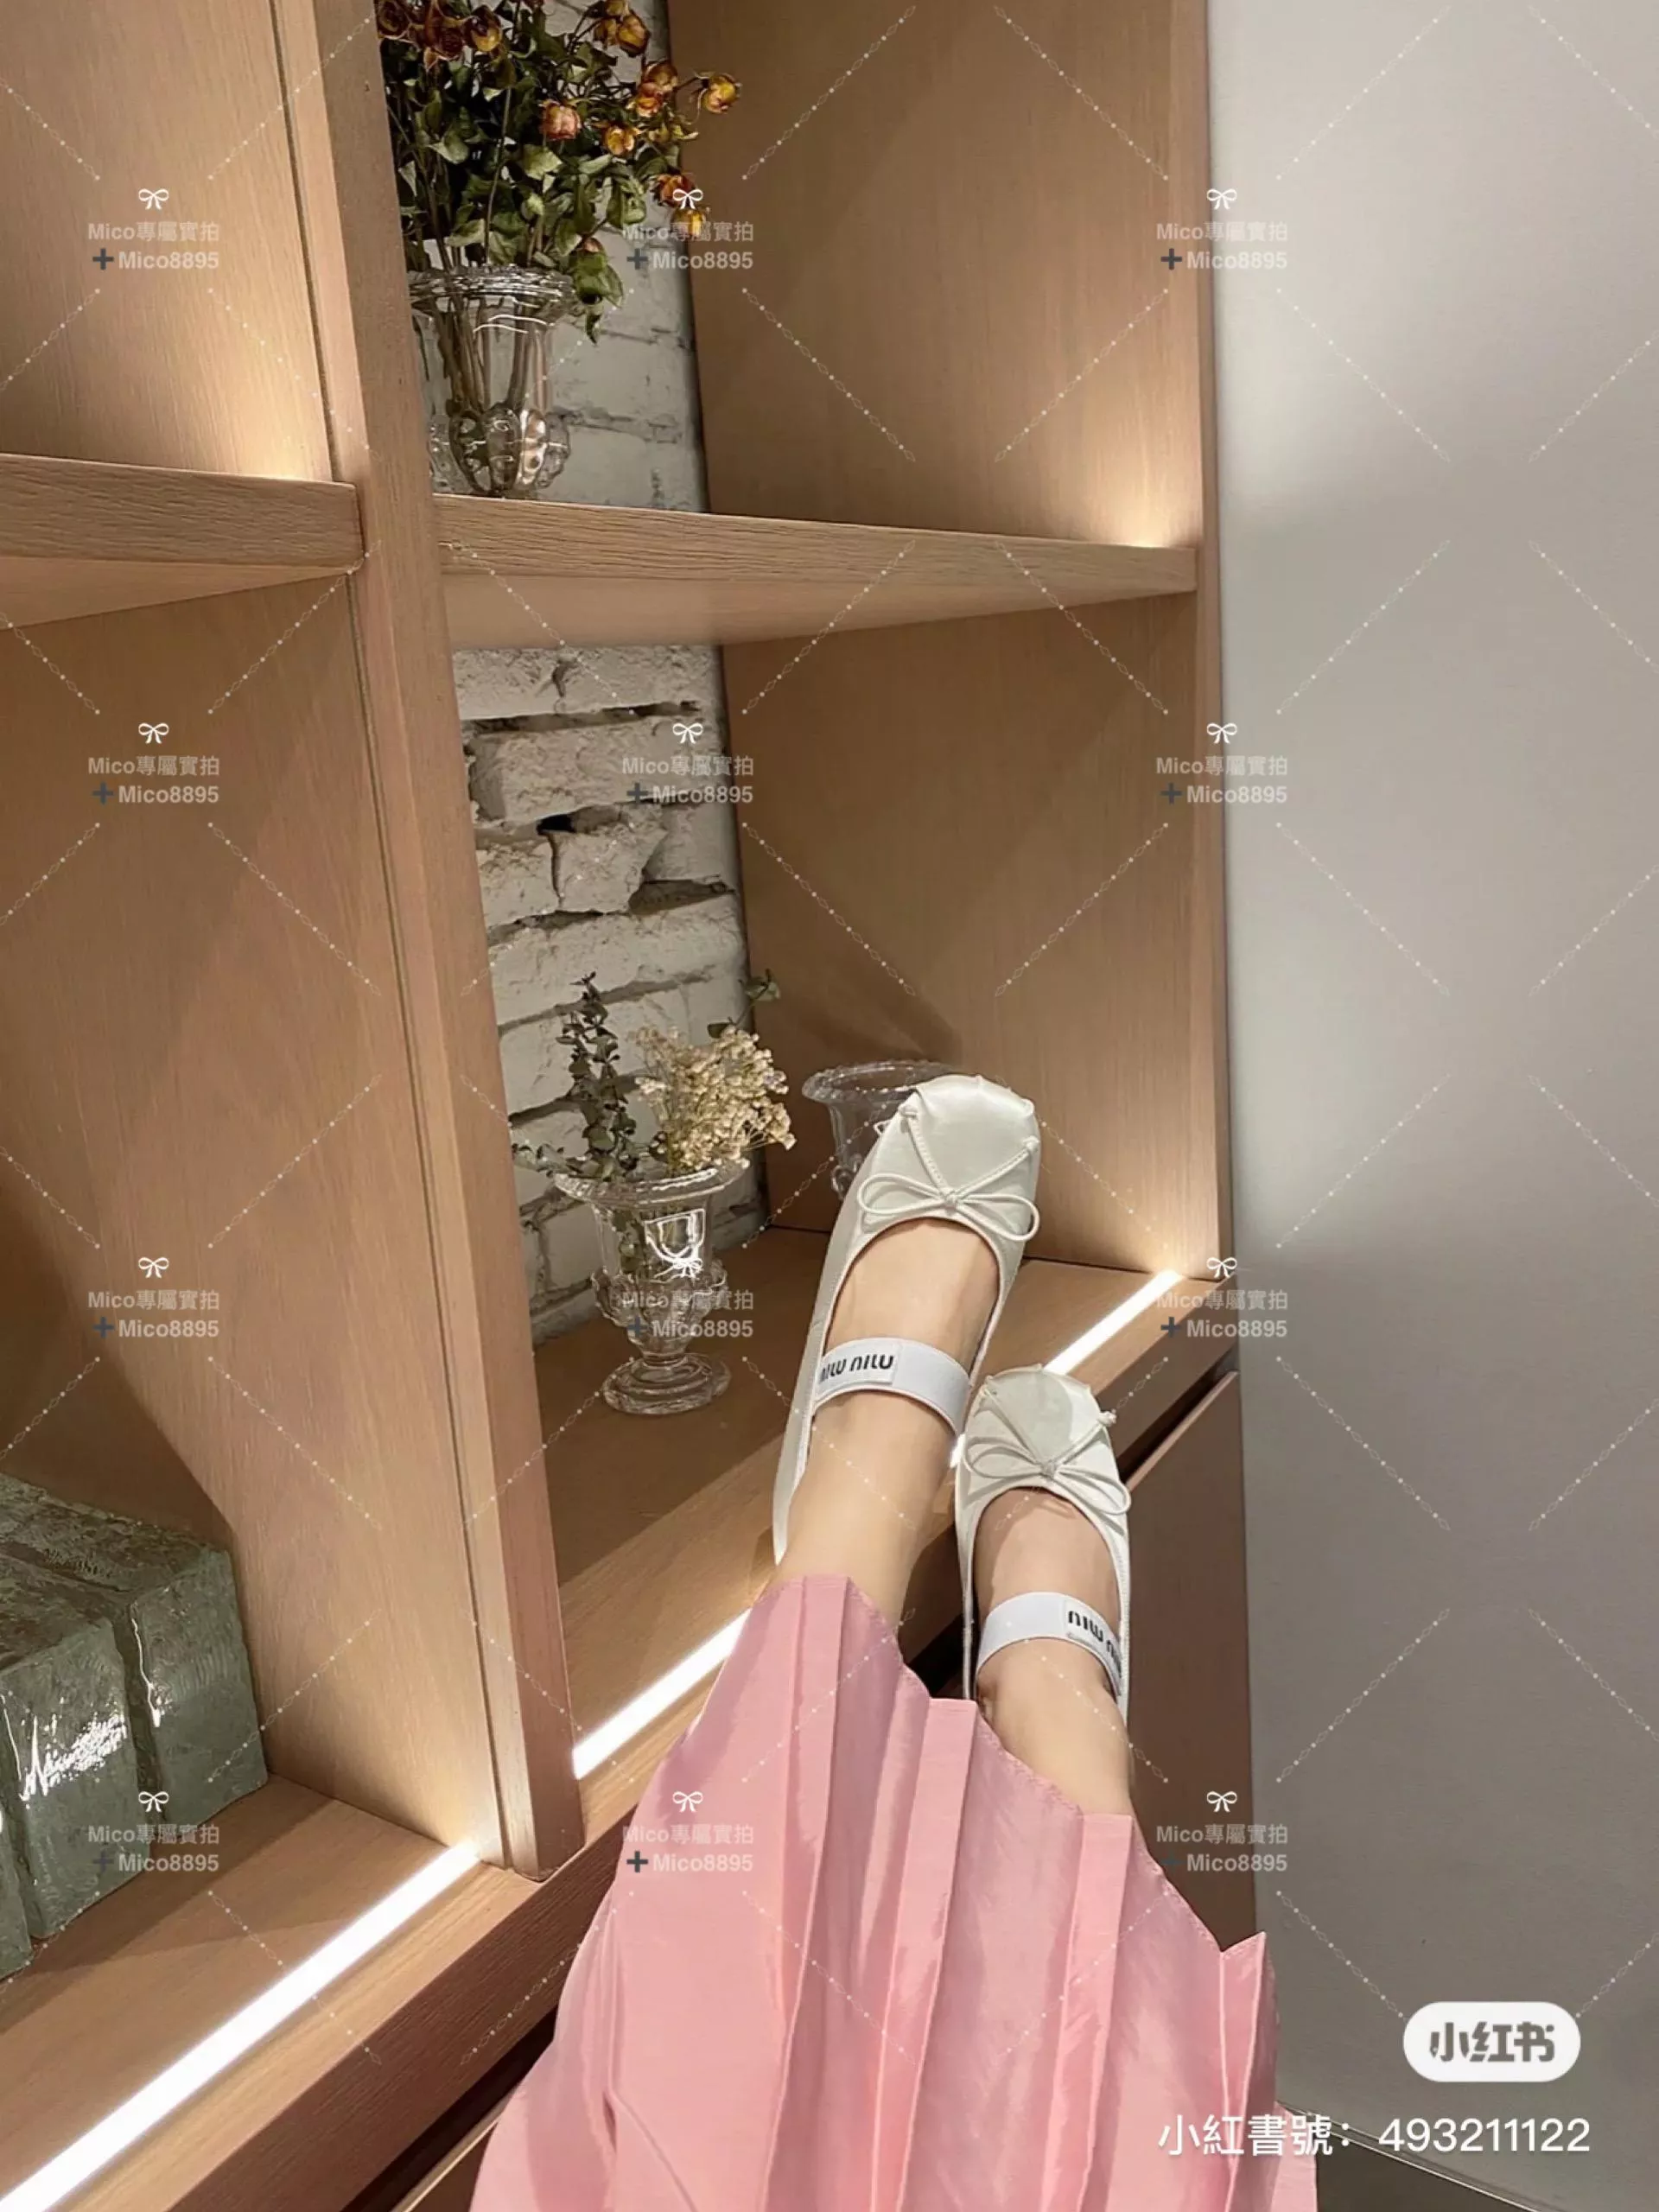 MIUMIU 新款綢緞 珠光白色真絲 瑪麗珍芭蕾舞鞋/平底鞋/娃娃鞋 35-39